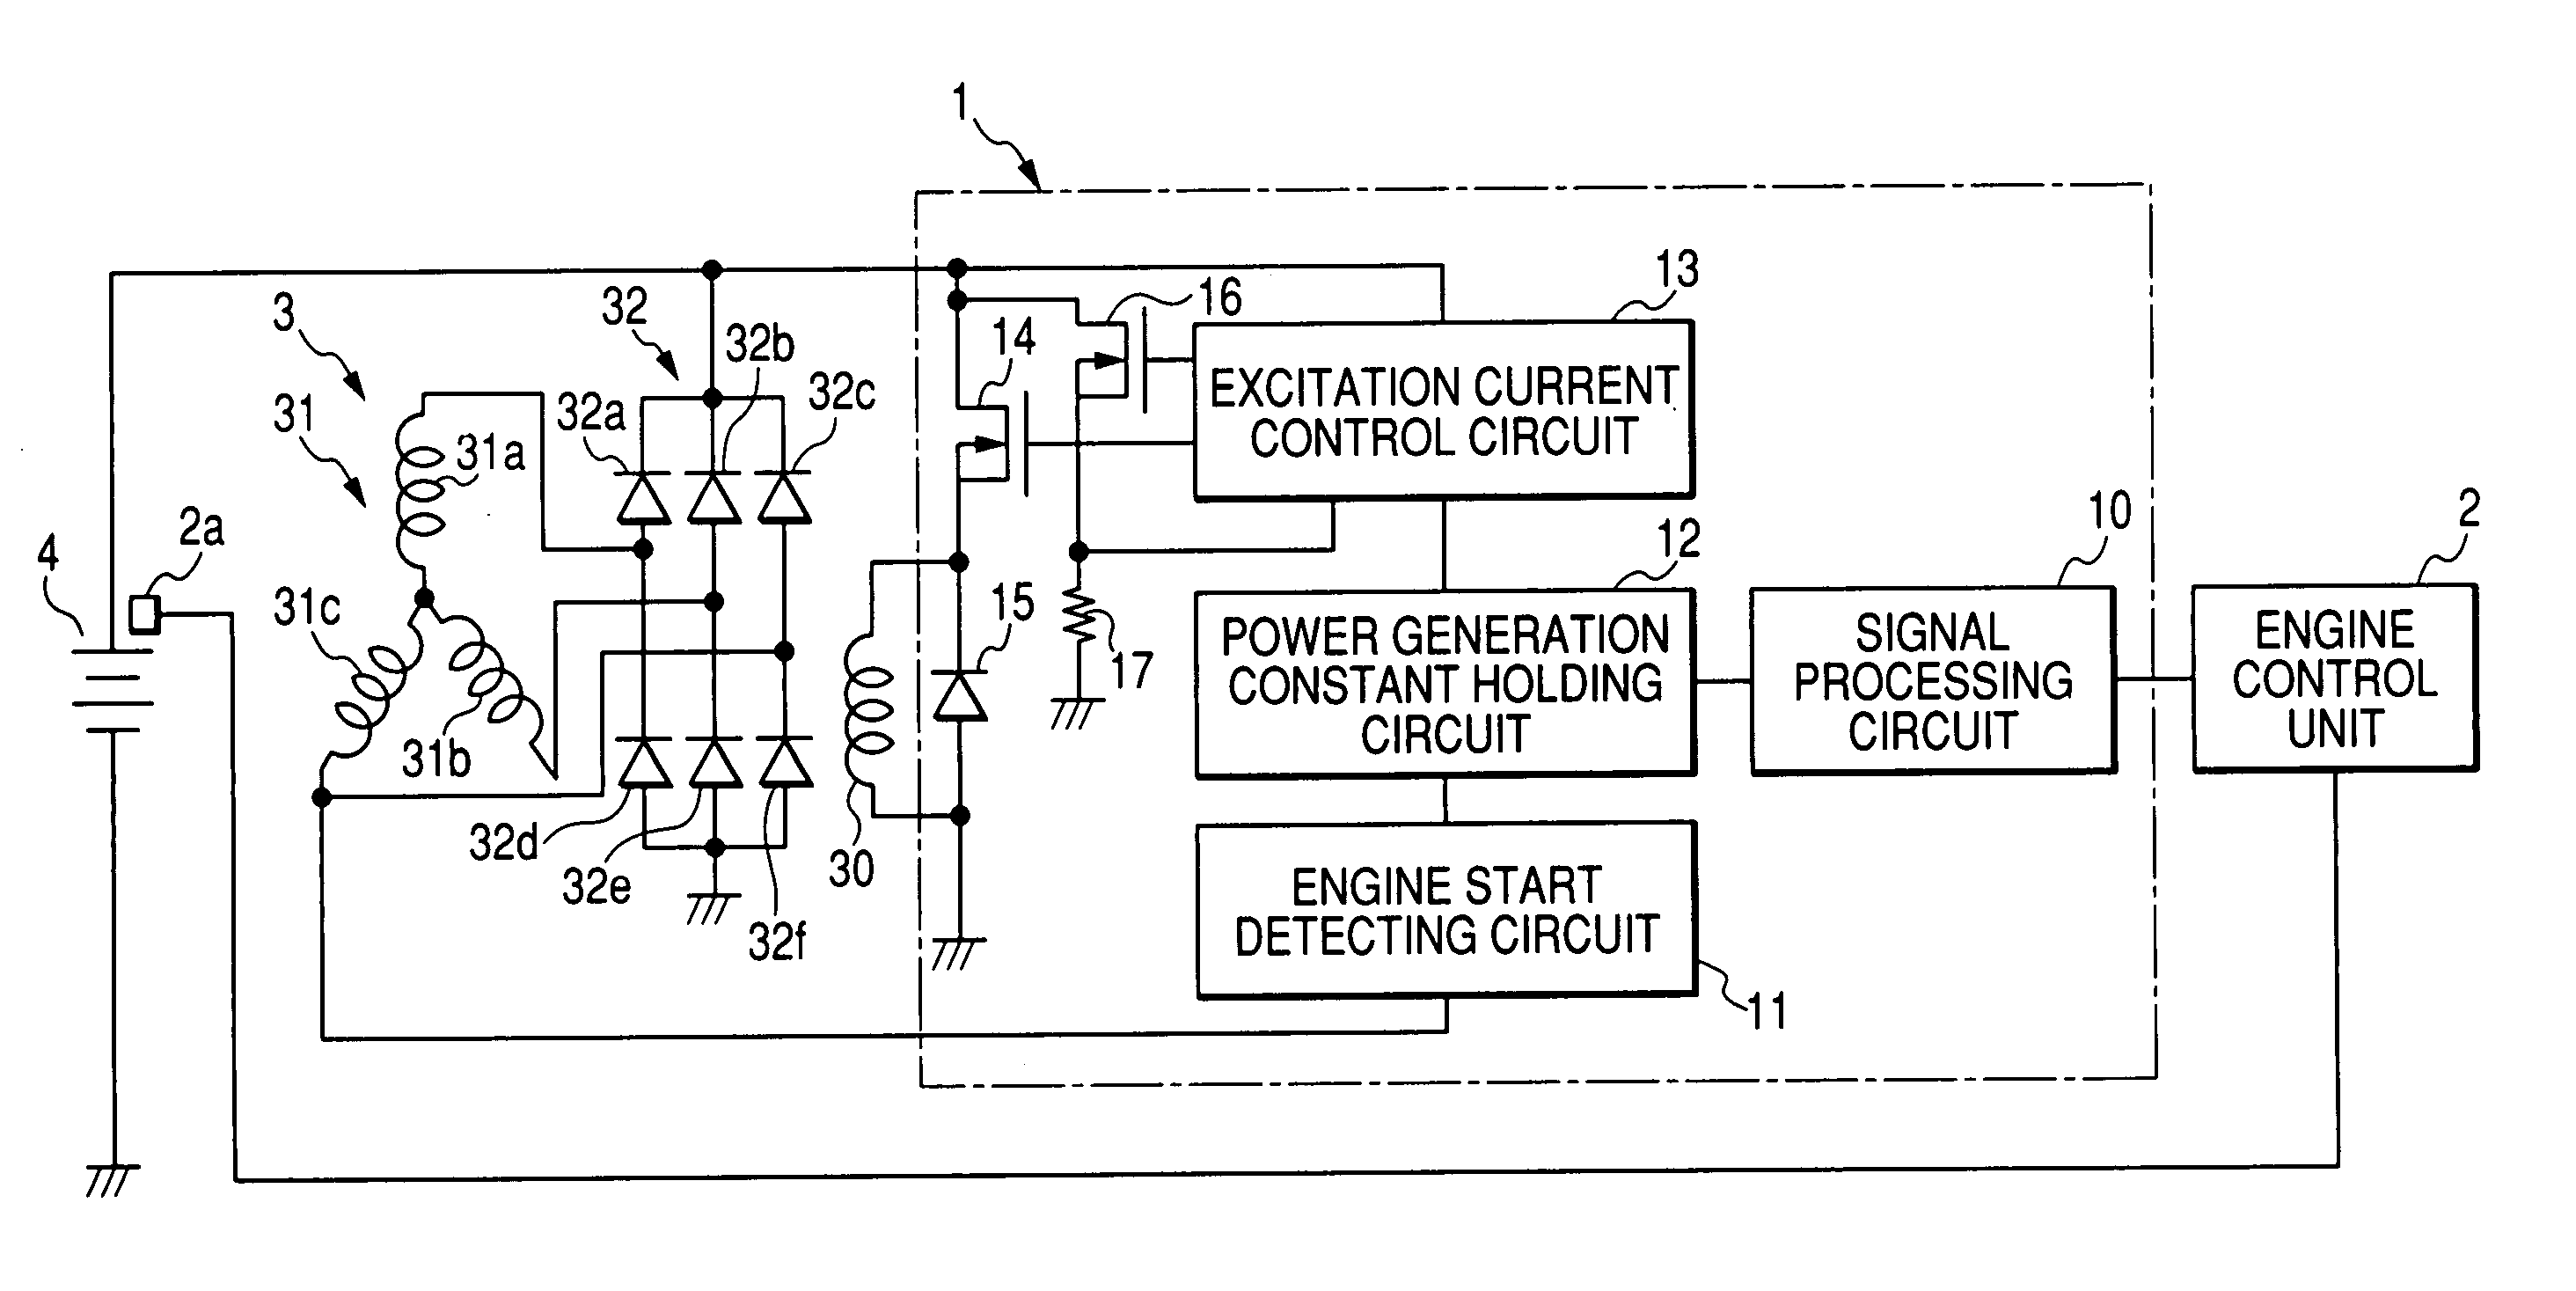 Power generation controller